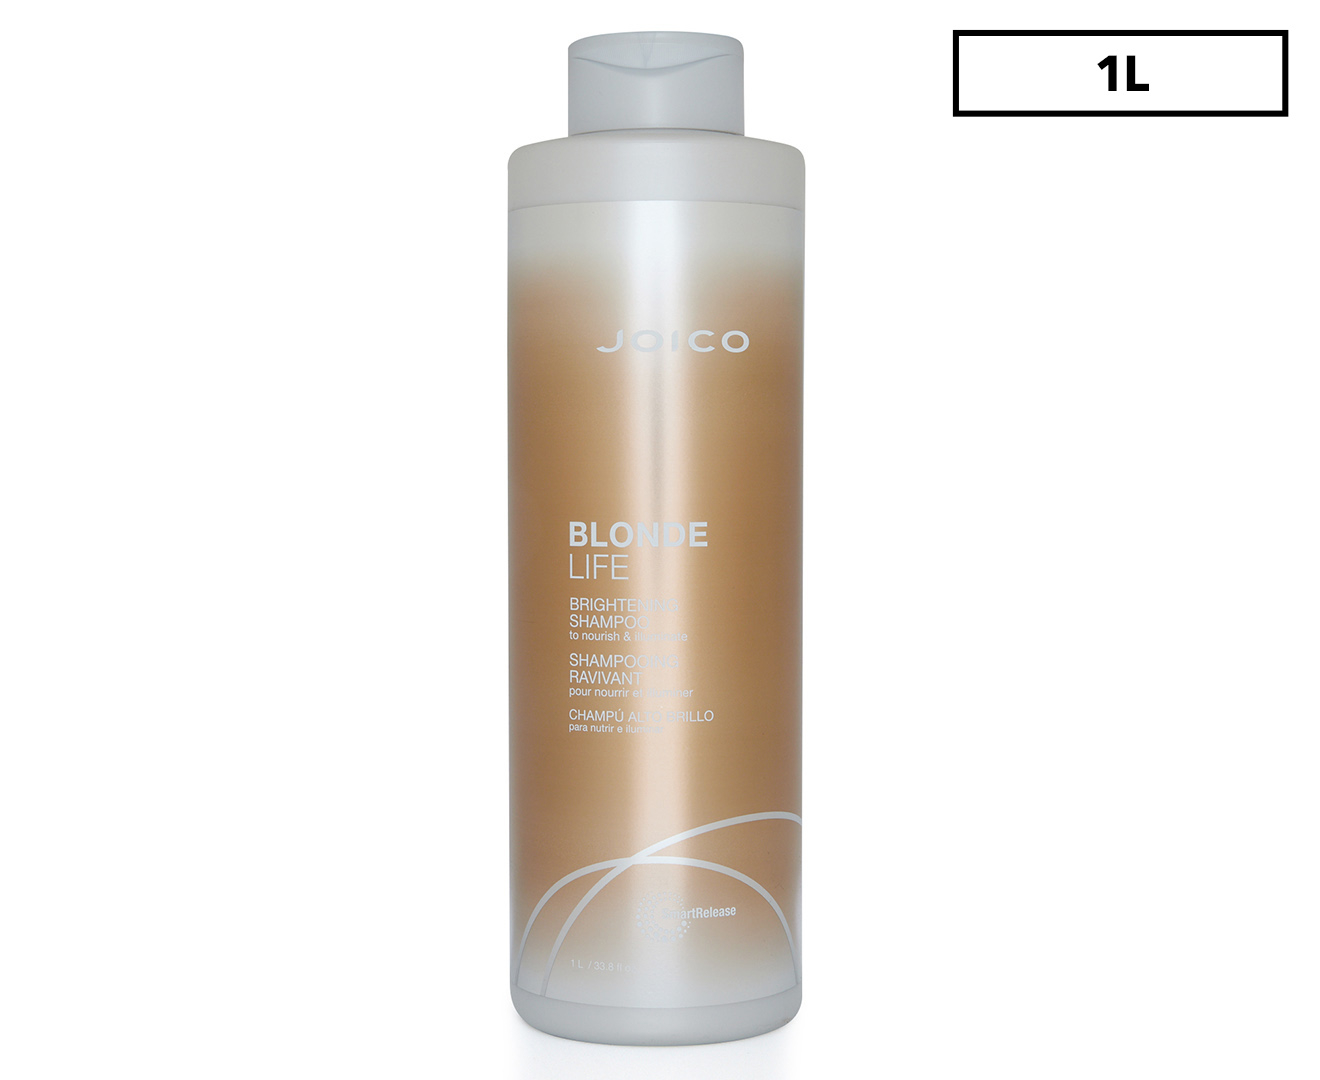 Joico Blonde Life Brightening Shampoo - wide 11